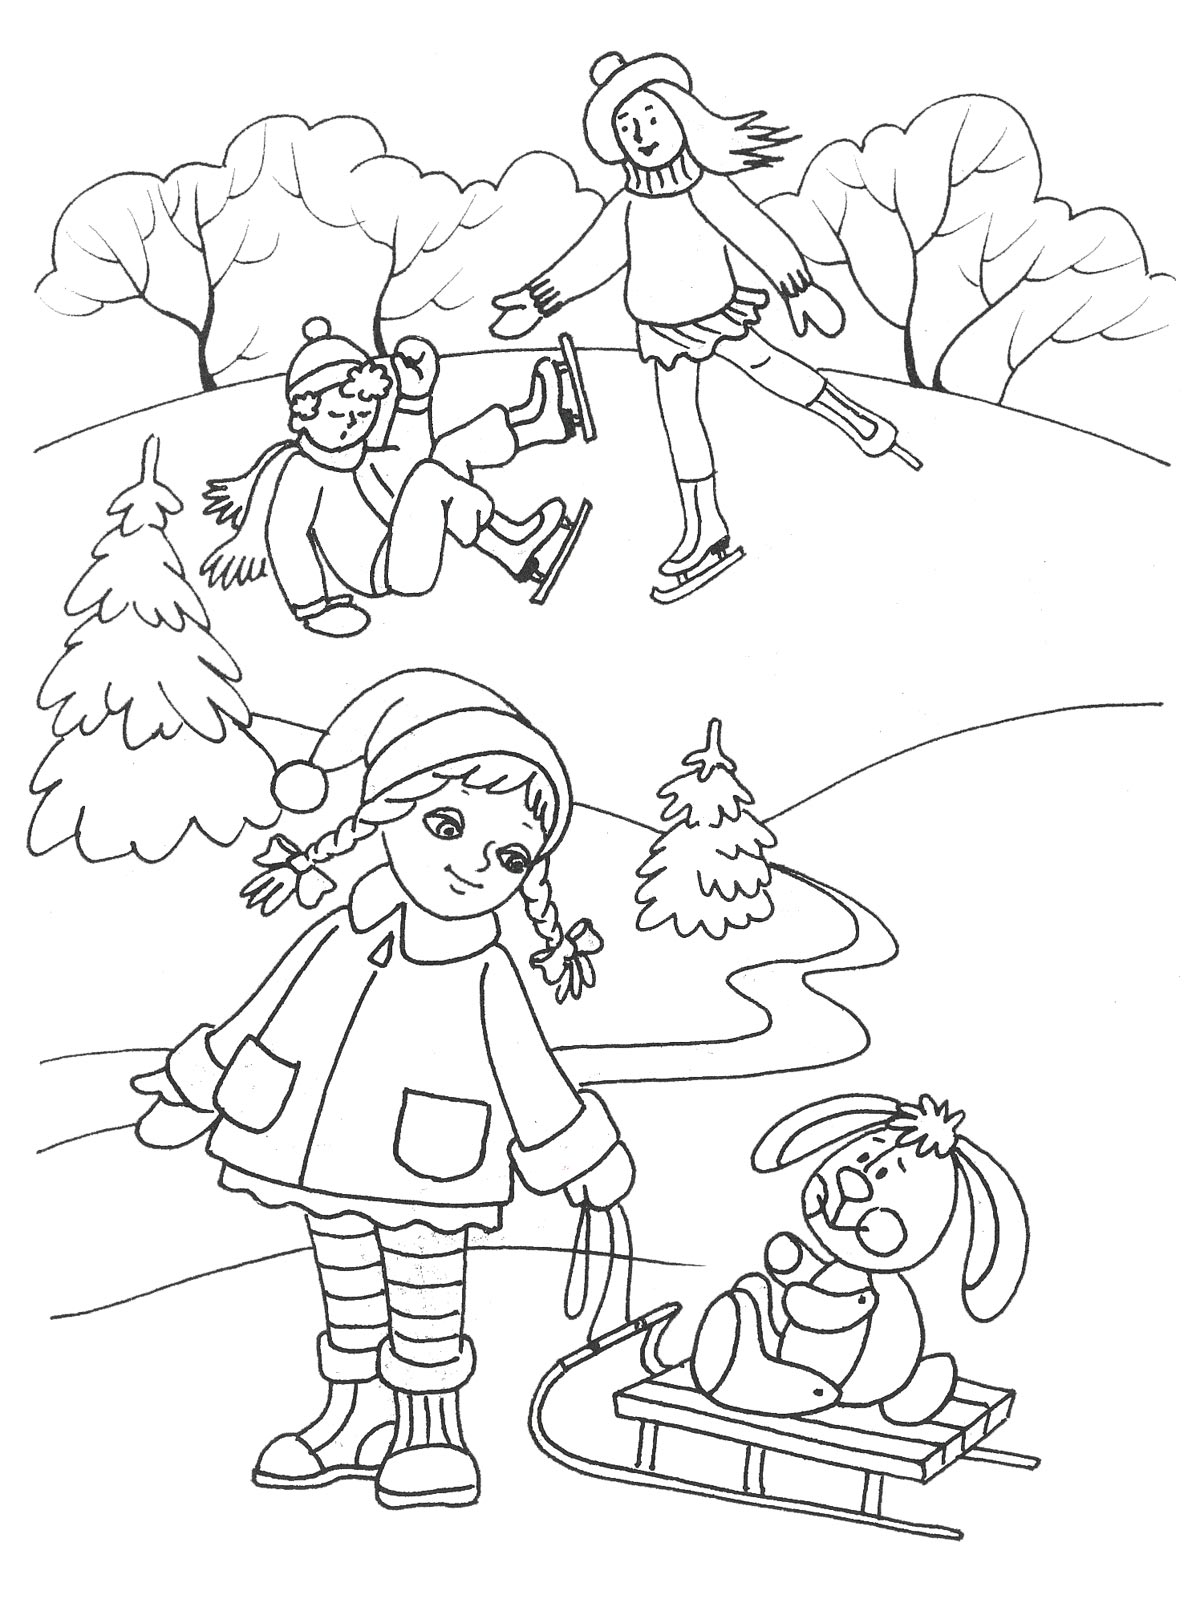 Winter fun coloring page